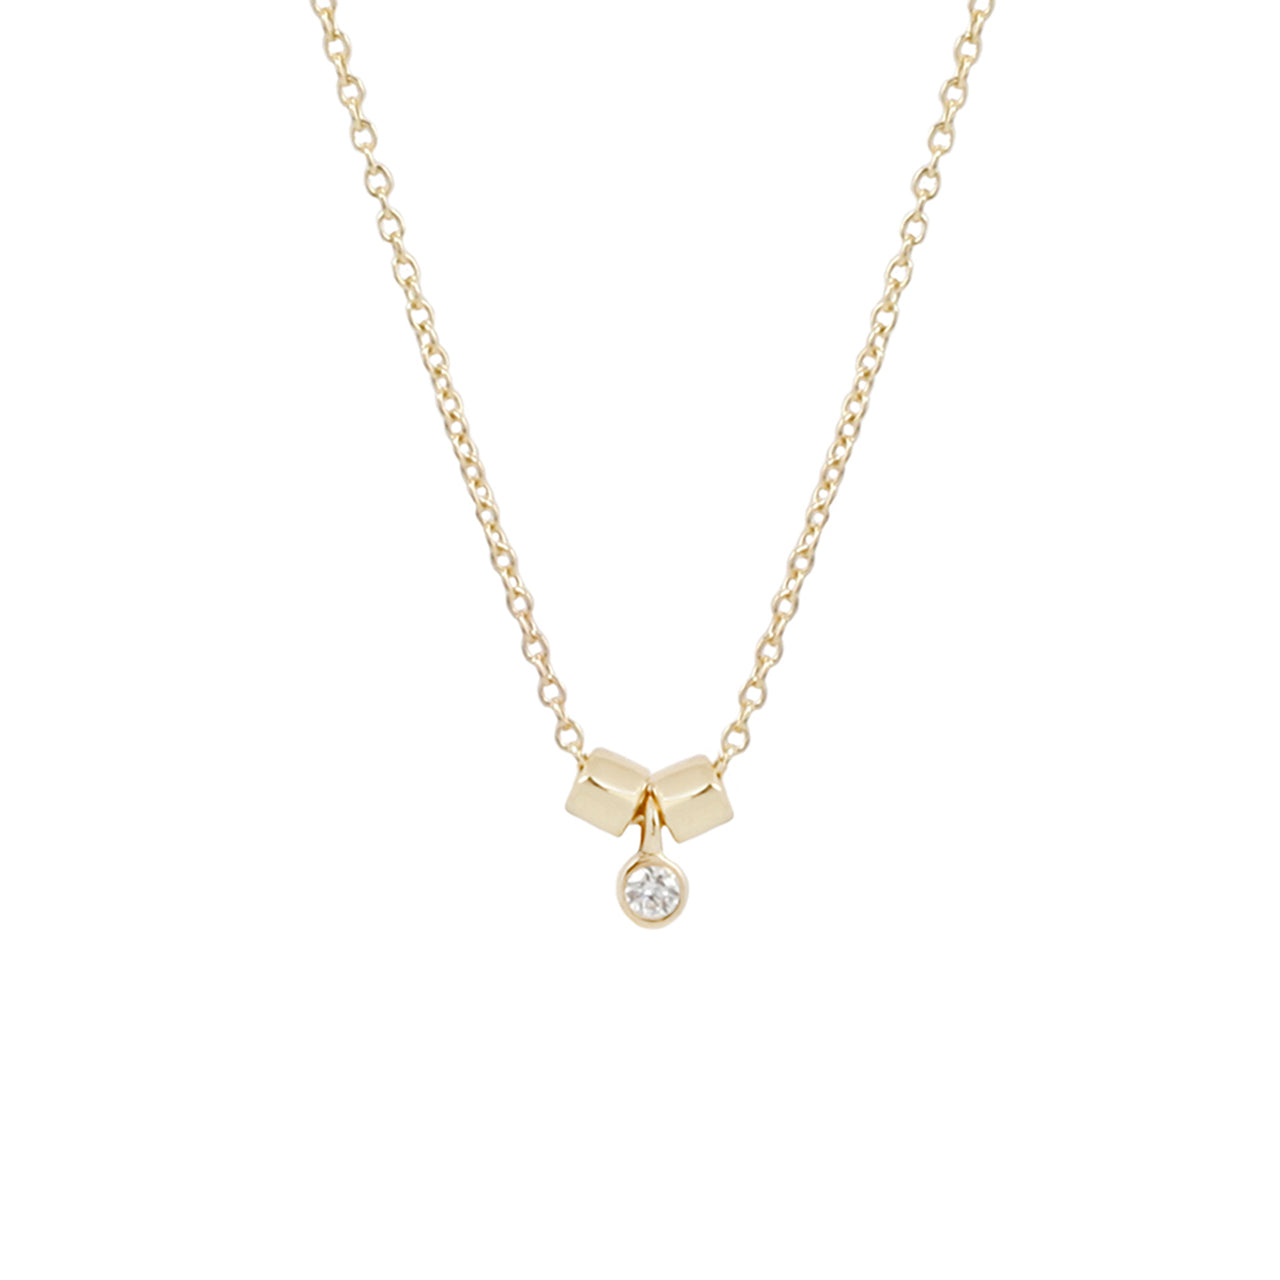 Pebble necklace with 1 diamond